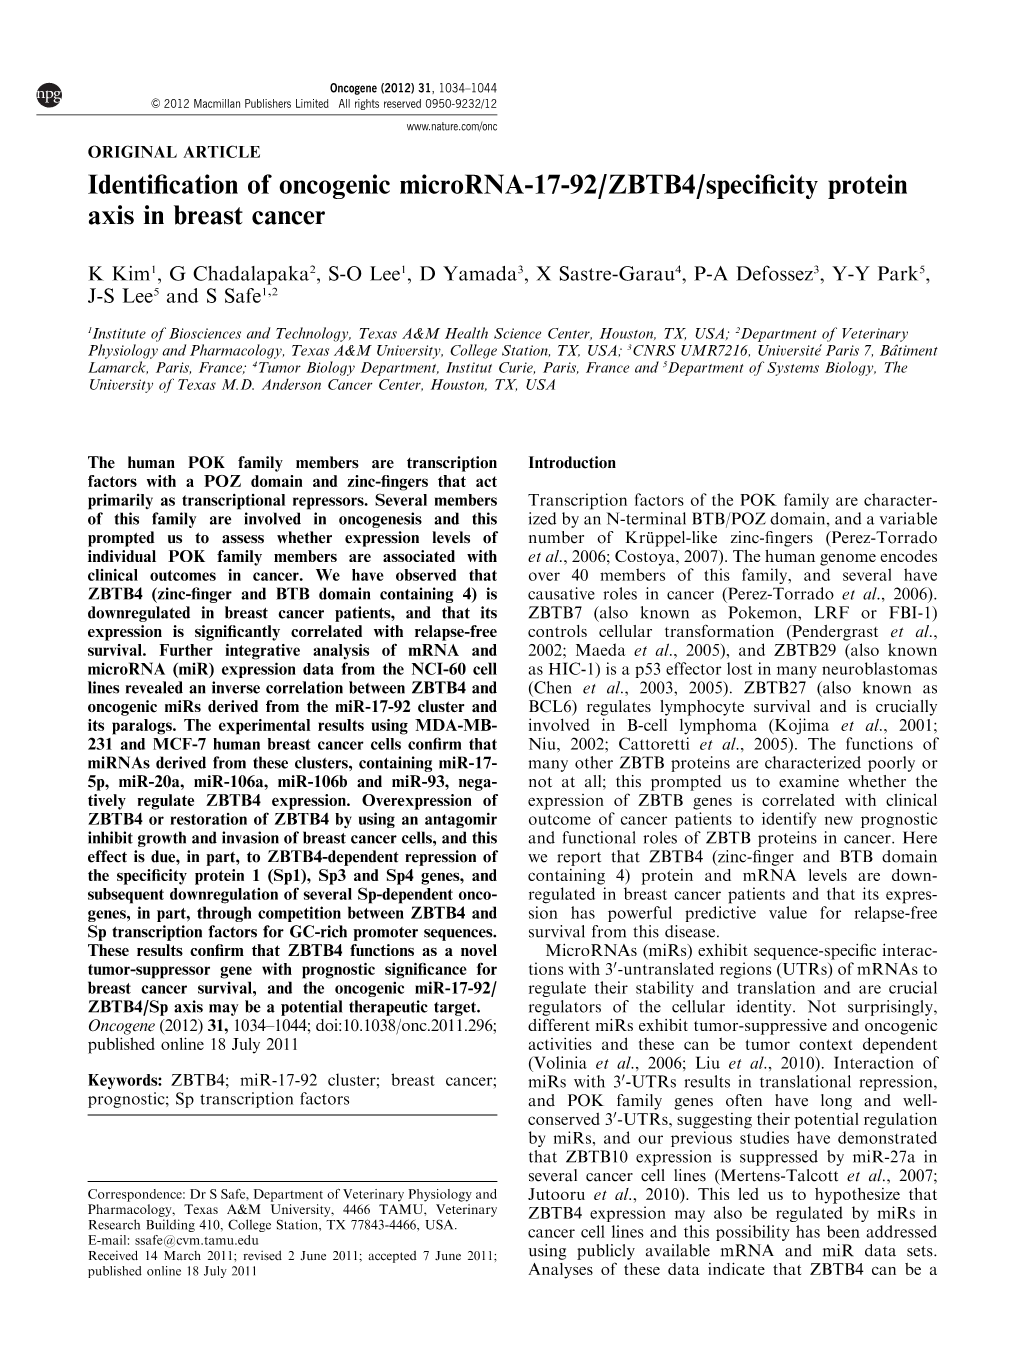 Identification of Oncogenic Microrna-17-92/ZBTB4/Specificity